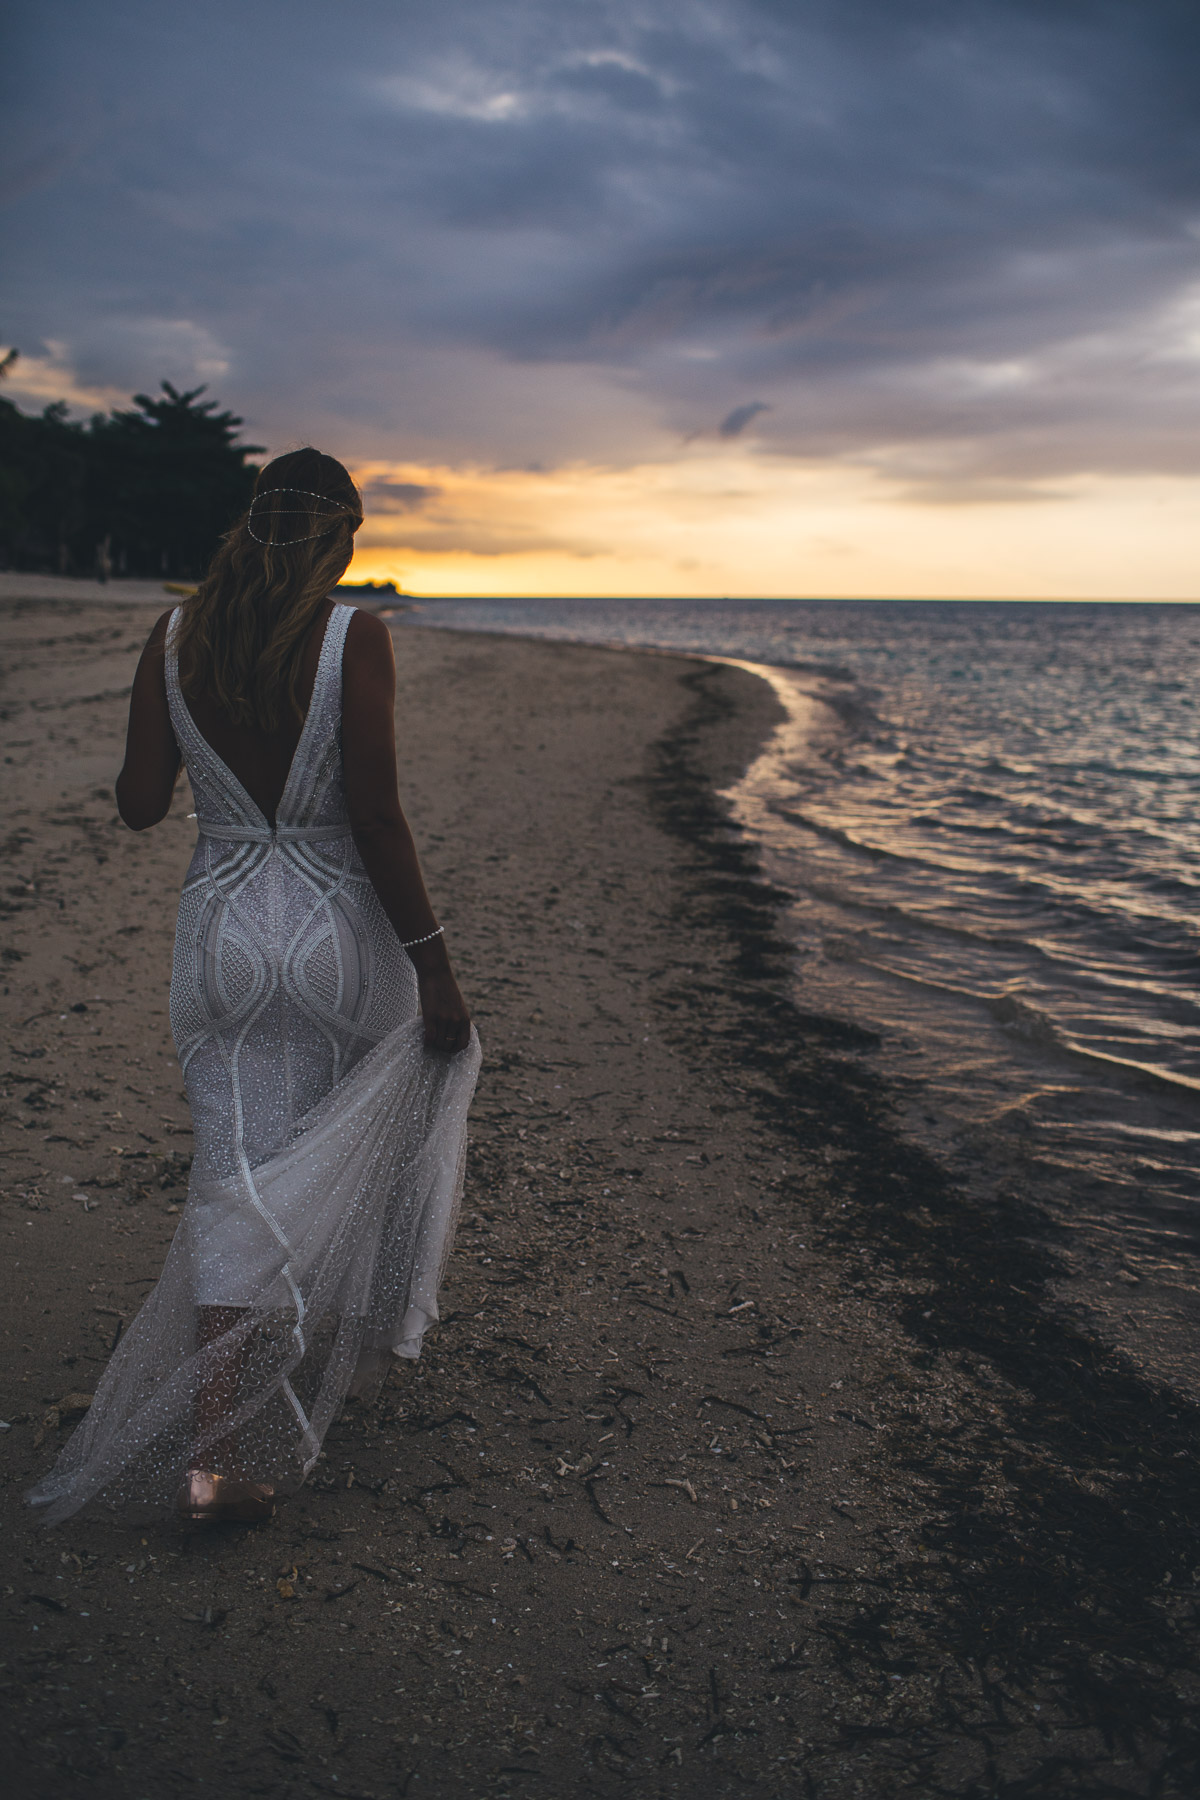 raana walking down the beach in her wedding dress